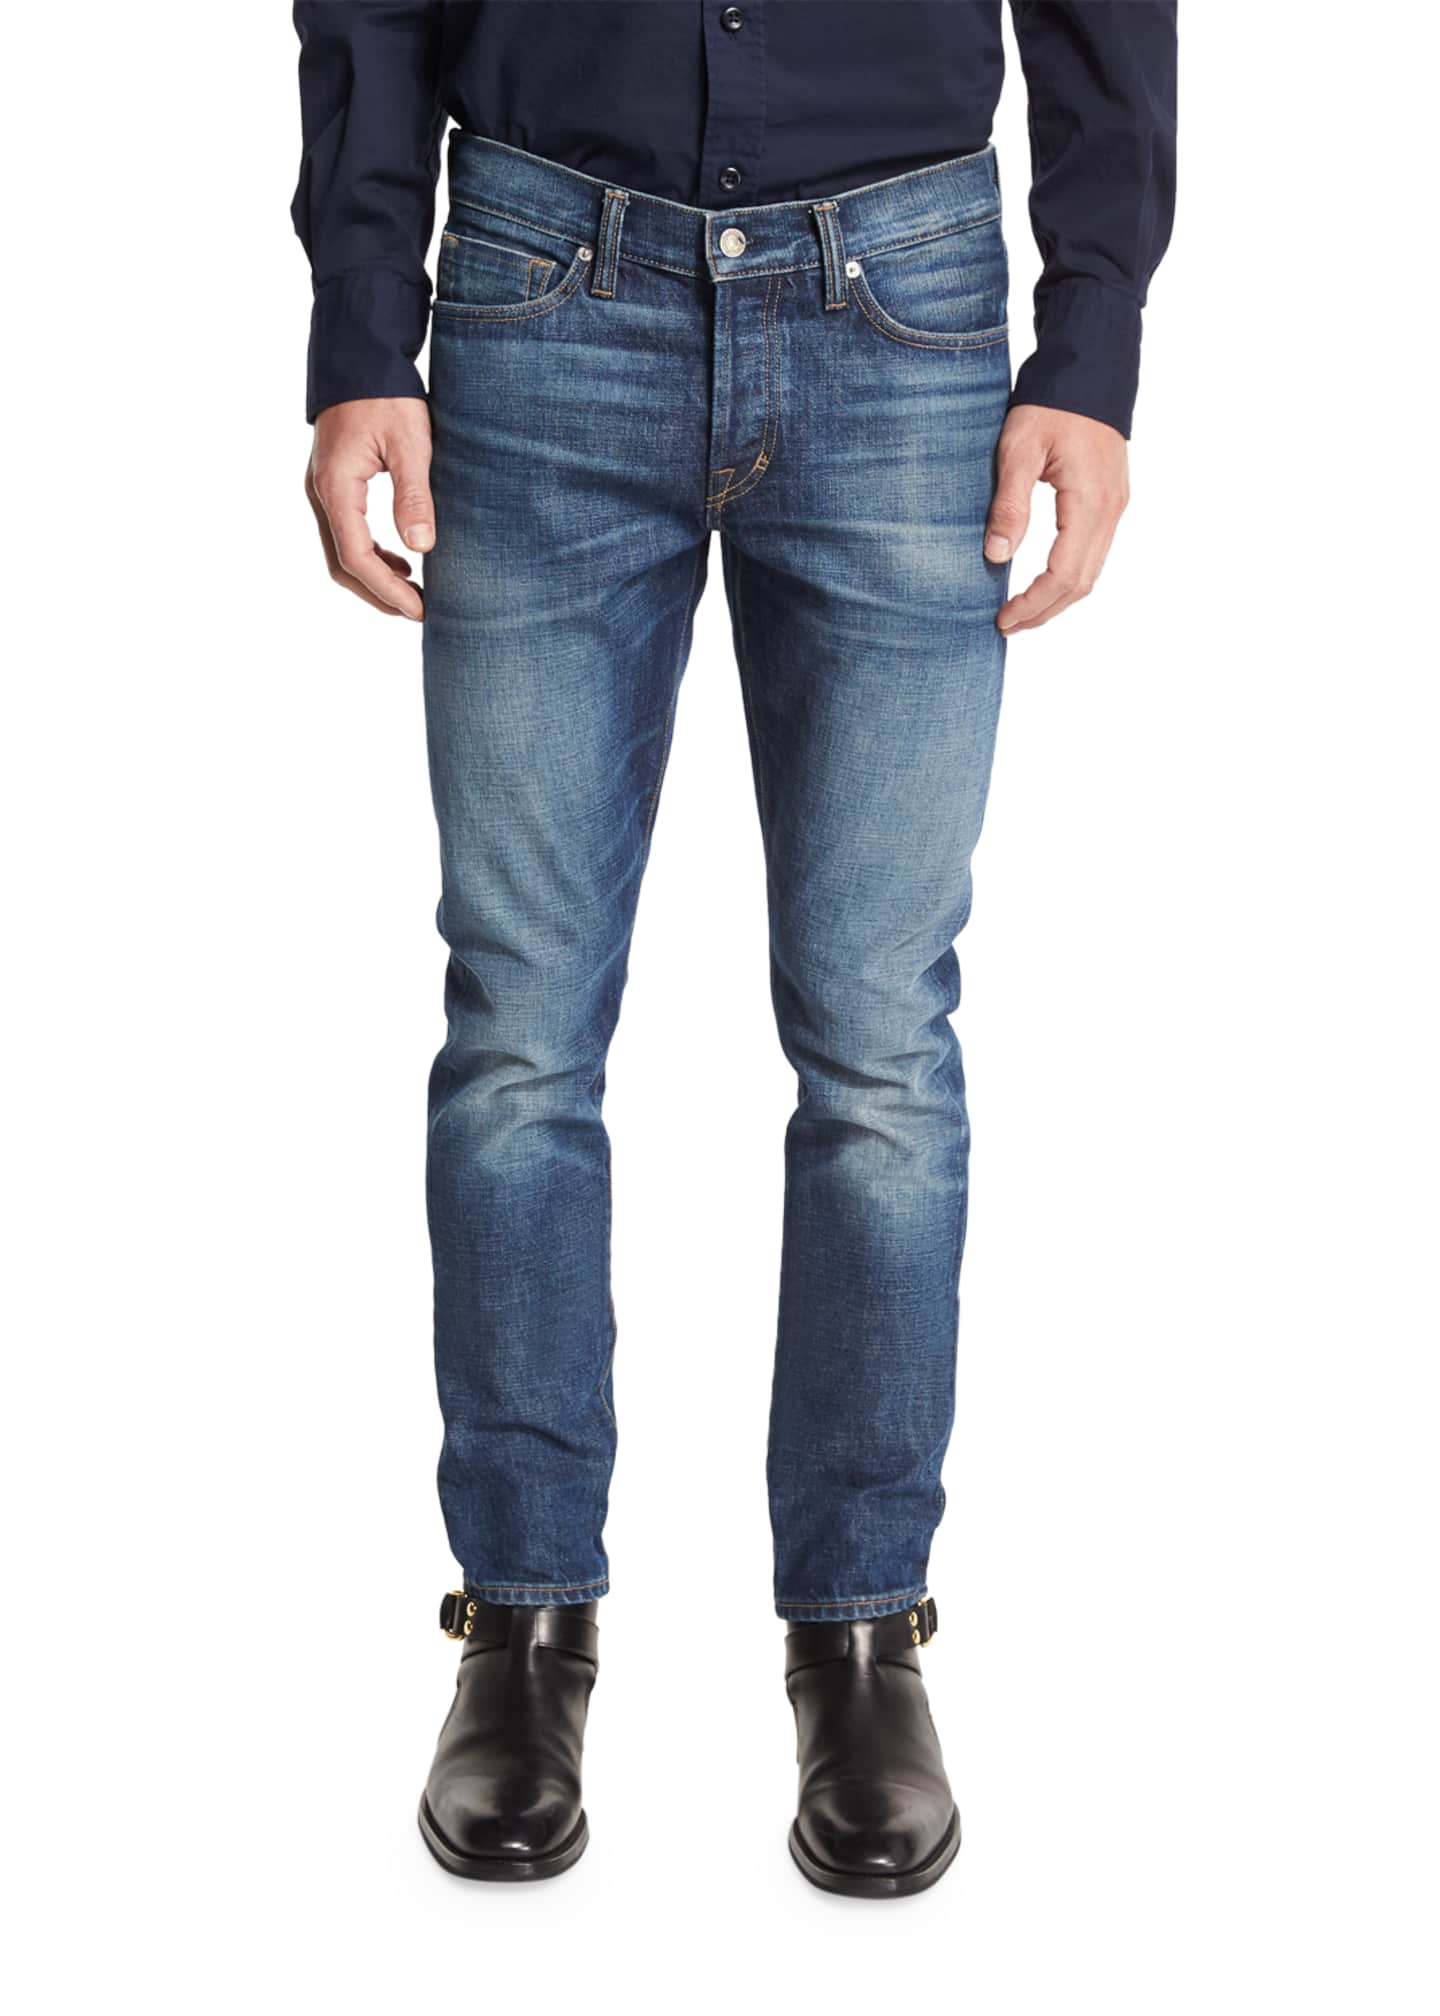 Introducir 31+ imagen tom ford jeans mens